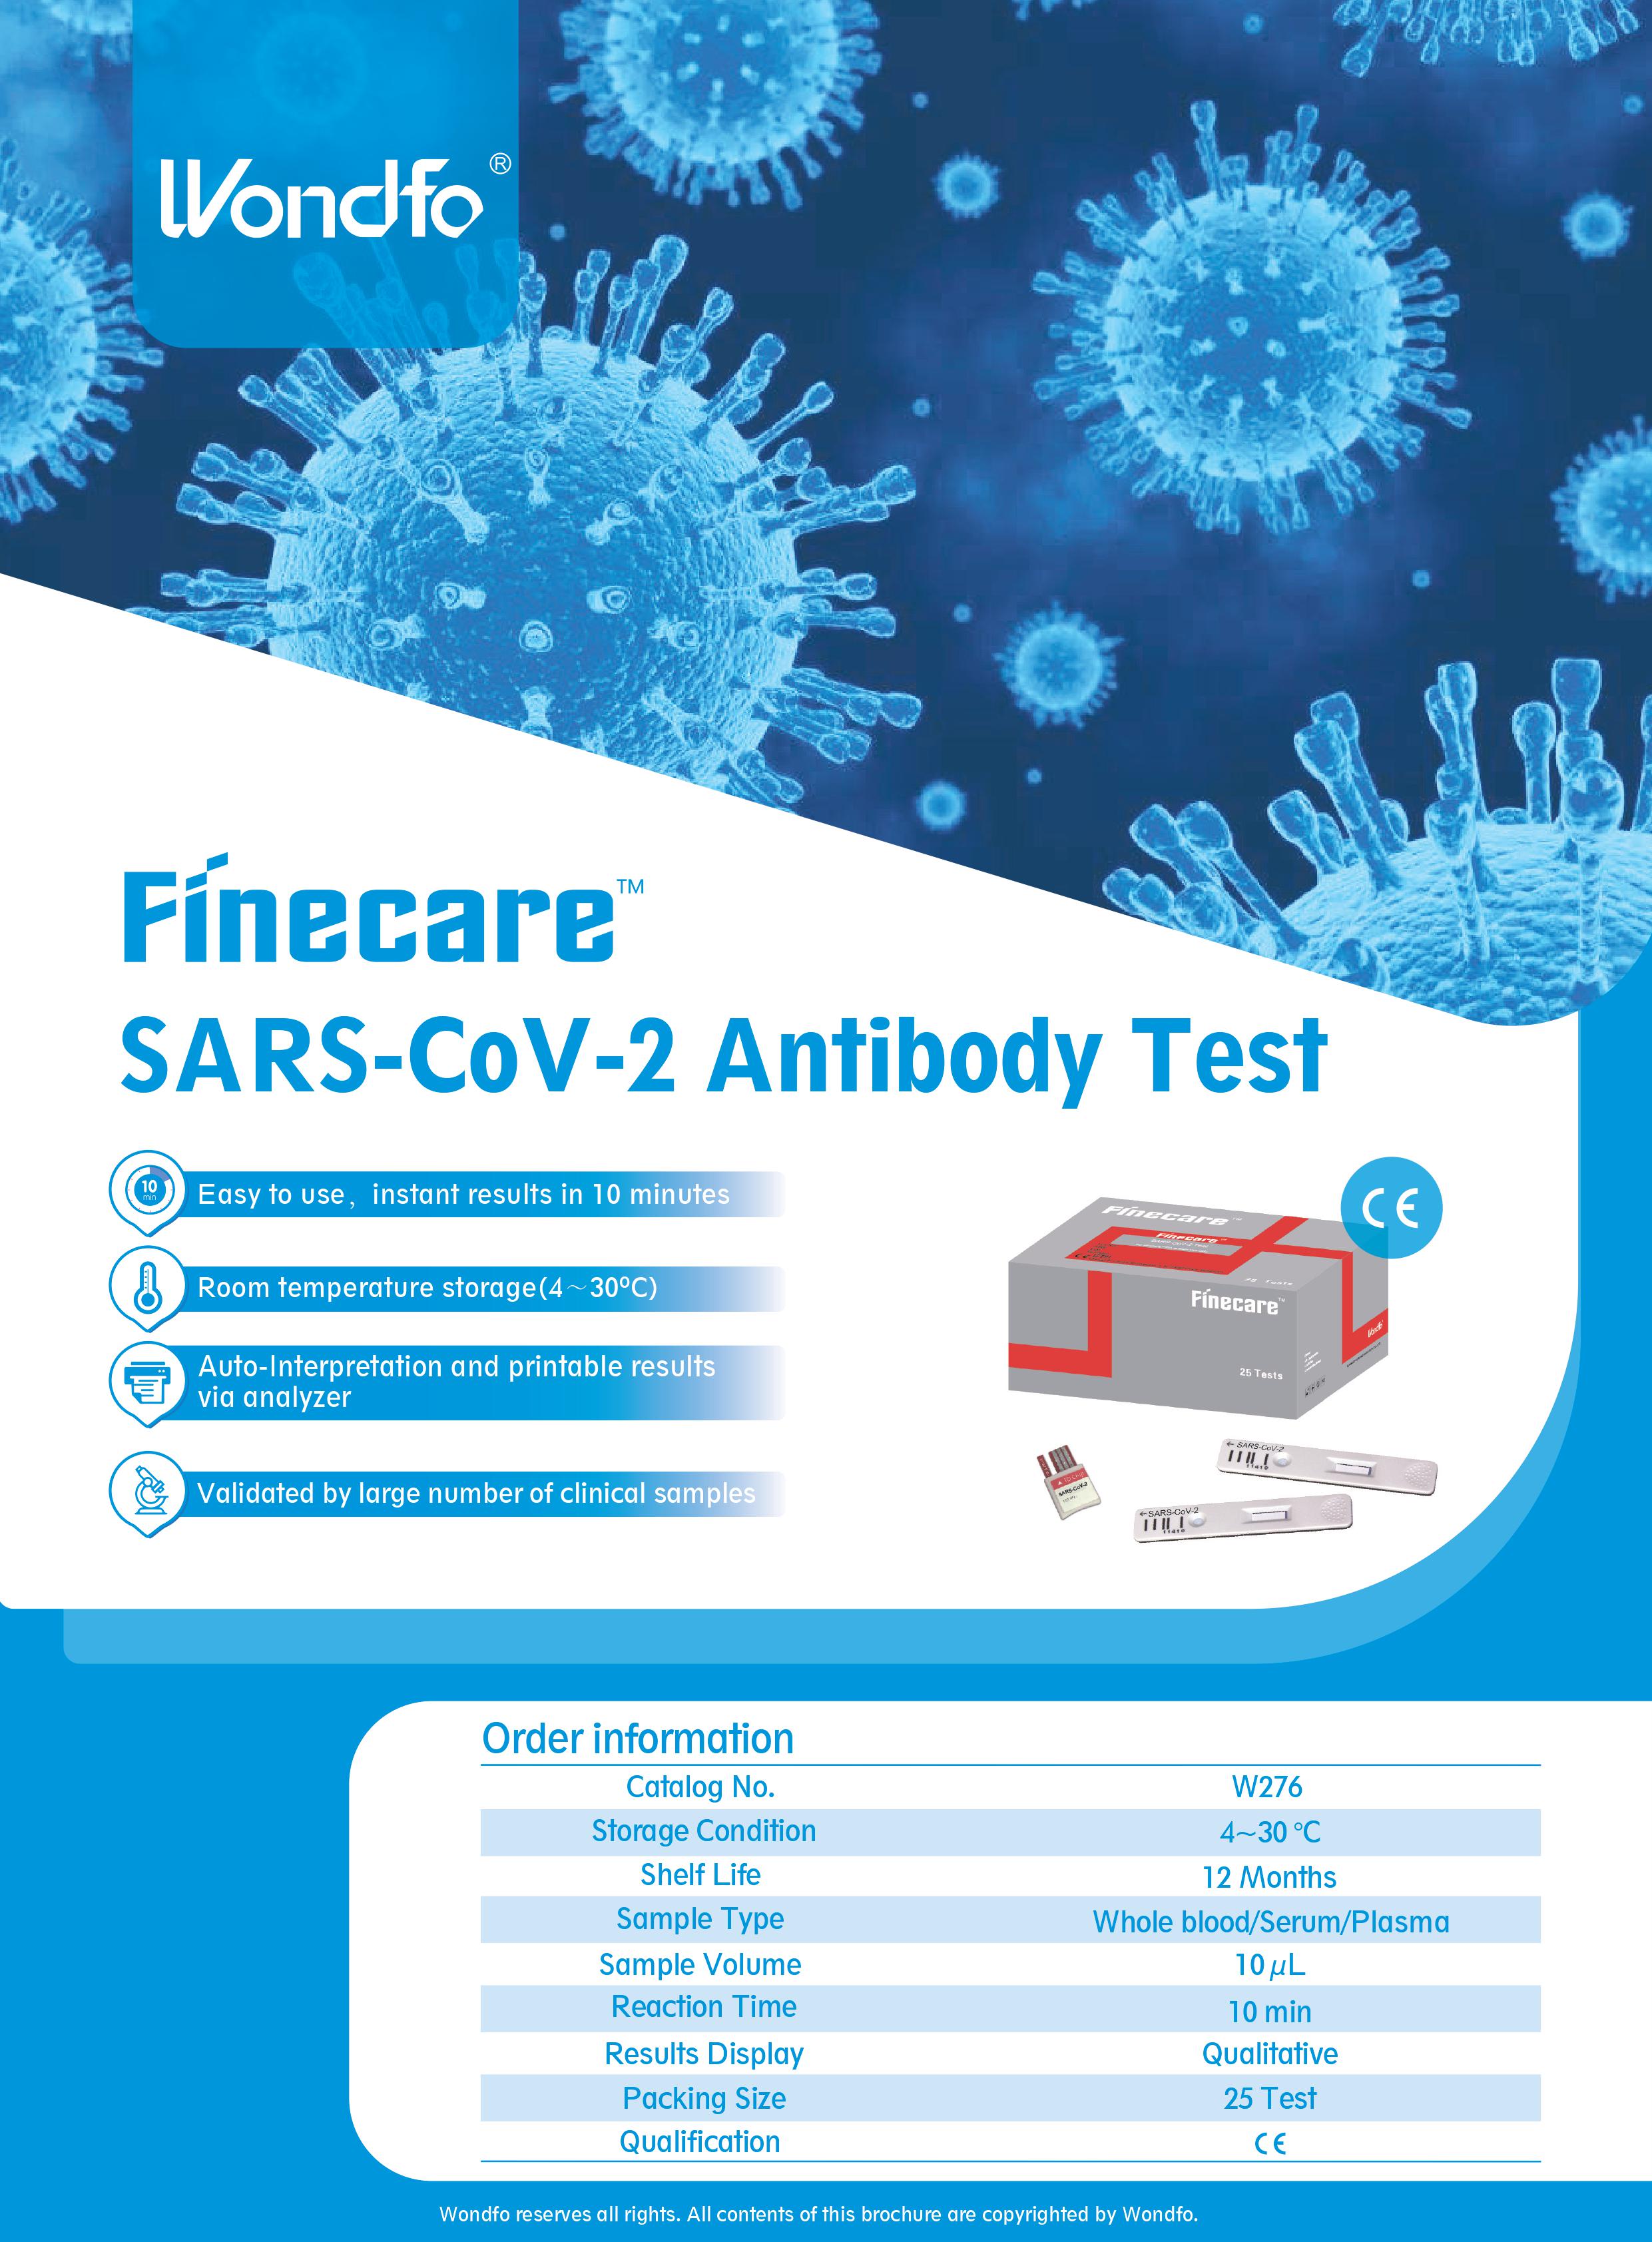 Finecare 2019-nCoV Antibody Test